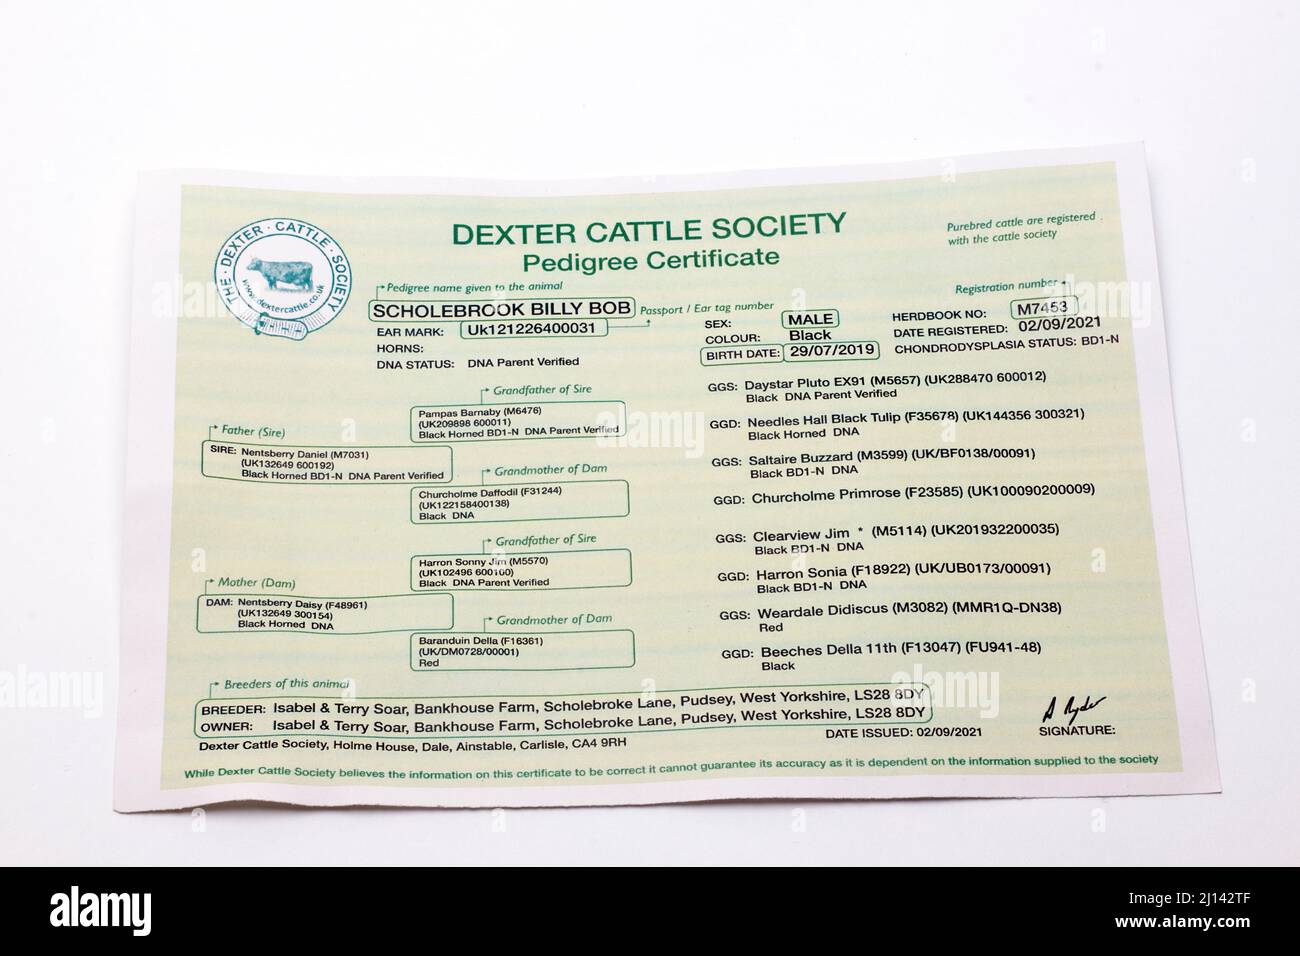 Dexter Cattle Society Pedigree Certificate Stock Photo